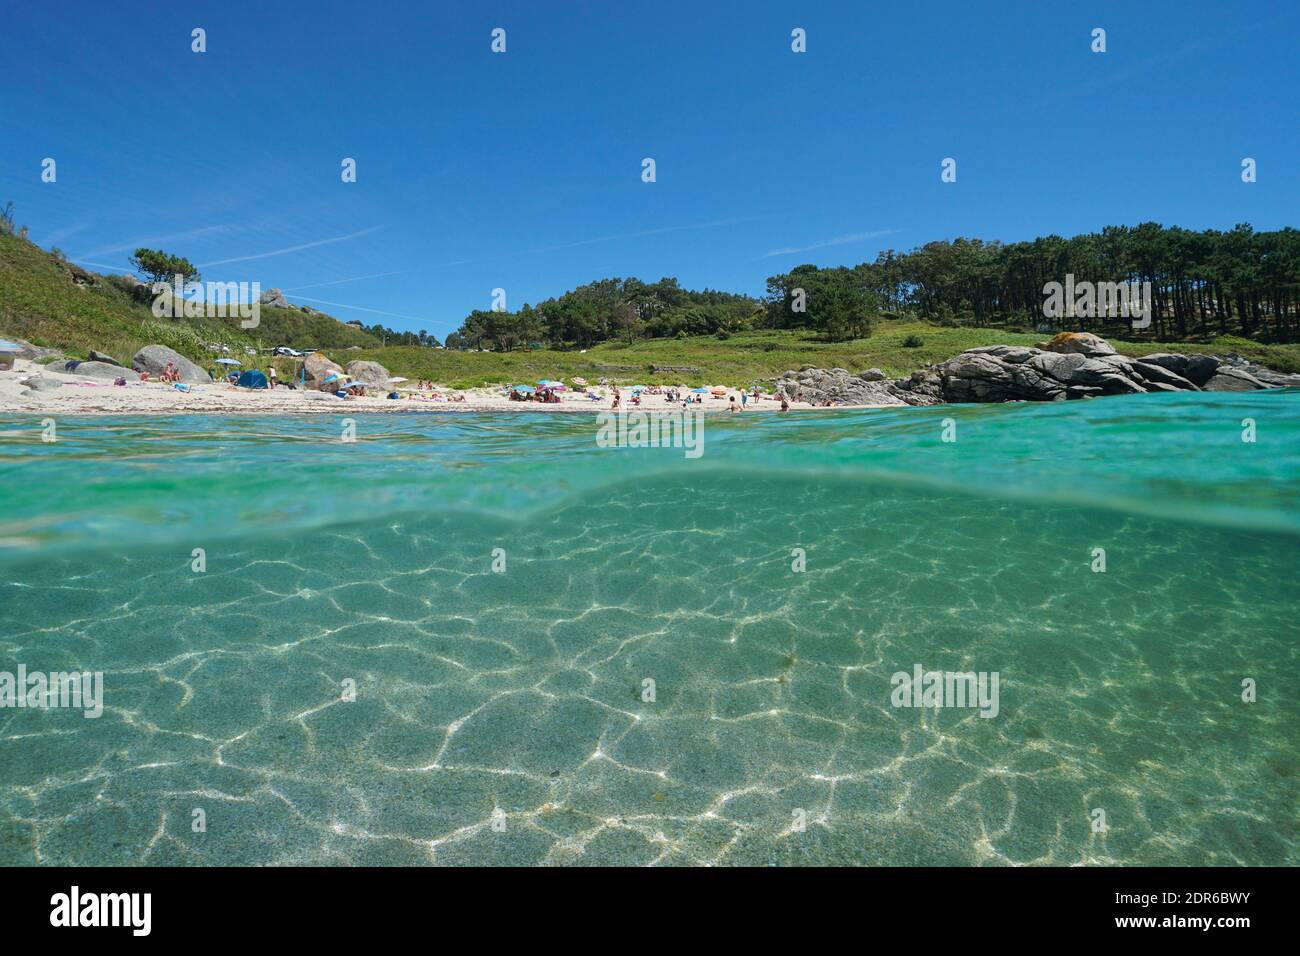 Spain Galicia coastline, beach in summer vacations and sand underwater, split view over and under water surface, Atlantic ocean, Bueu, Pontevedra Stock Photo